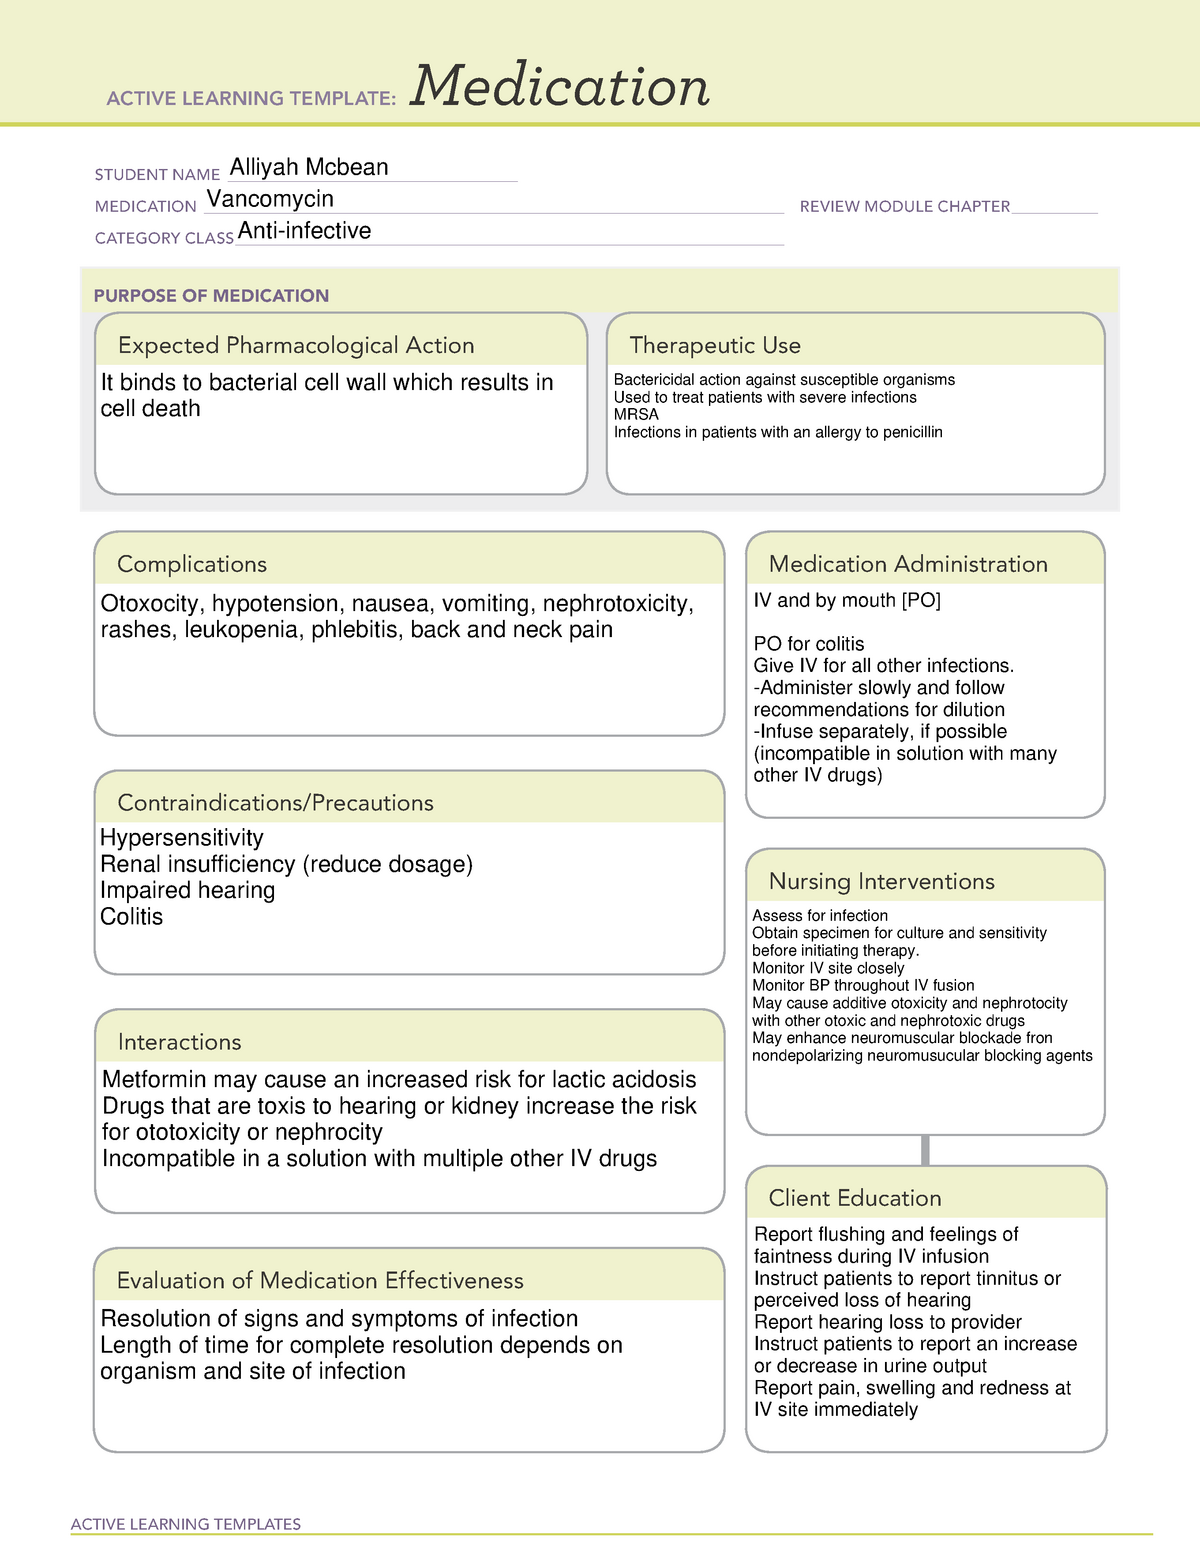 vancomycin-ati-medication-template